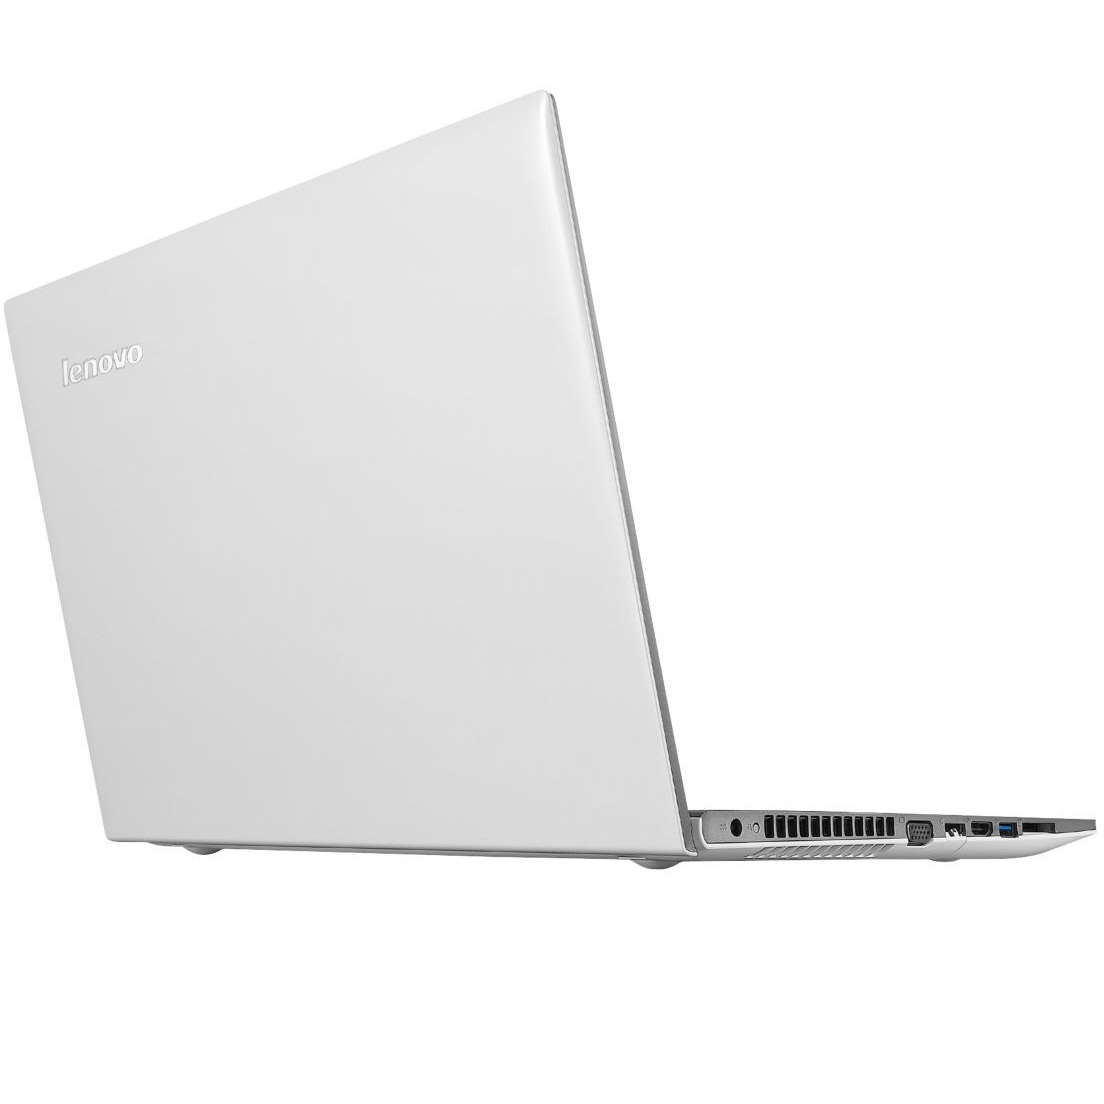 Đánh giá laptop Lenovo IDEAPAD 500 15ISK-80NT00FDVN